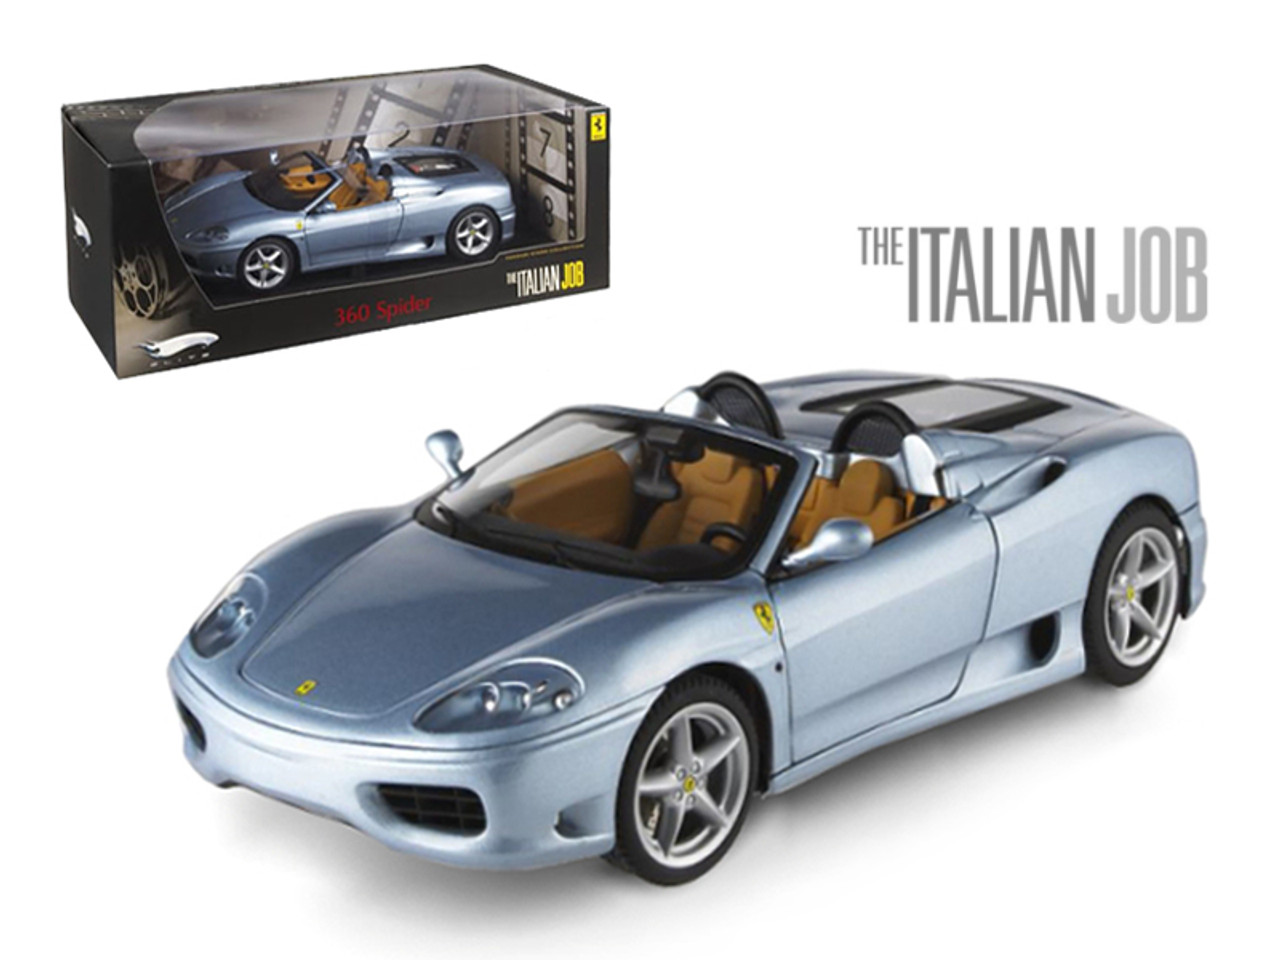 Ferrari 360 Modena Spider "The Italian Job" Movie Elite Edition 1/18 Diecast Model Car by Hotwheels